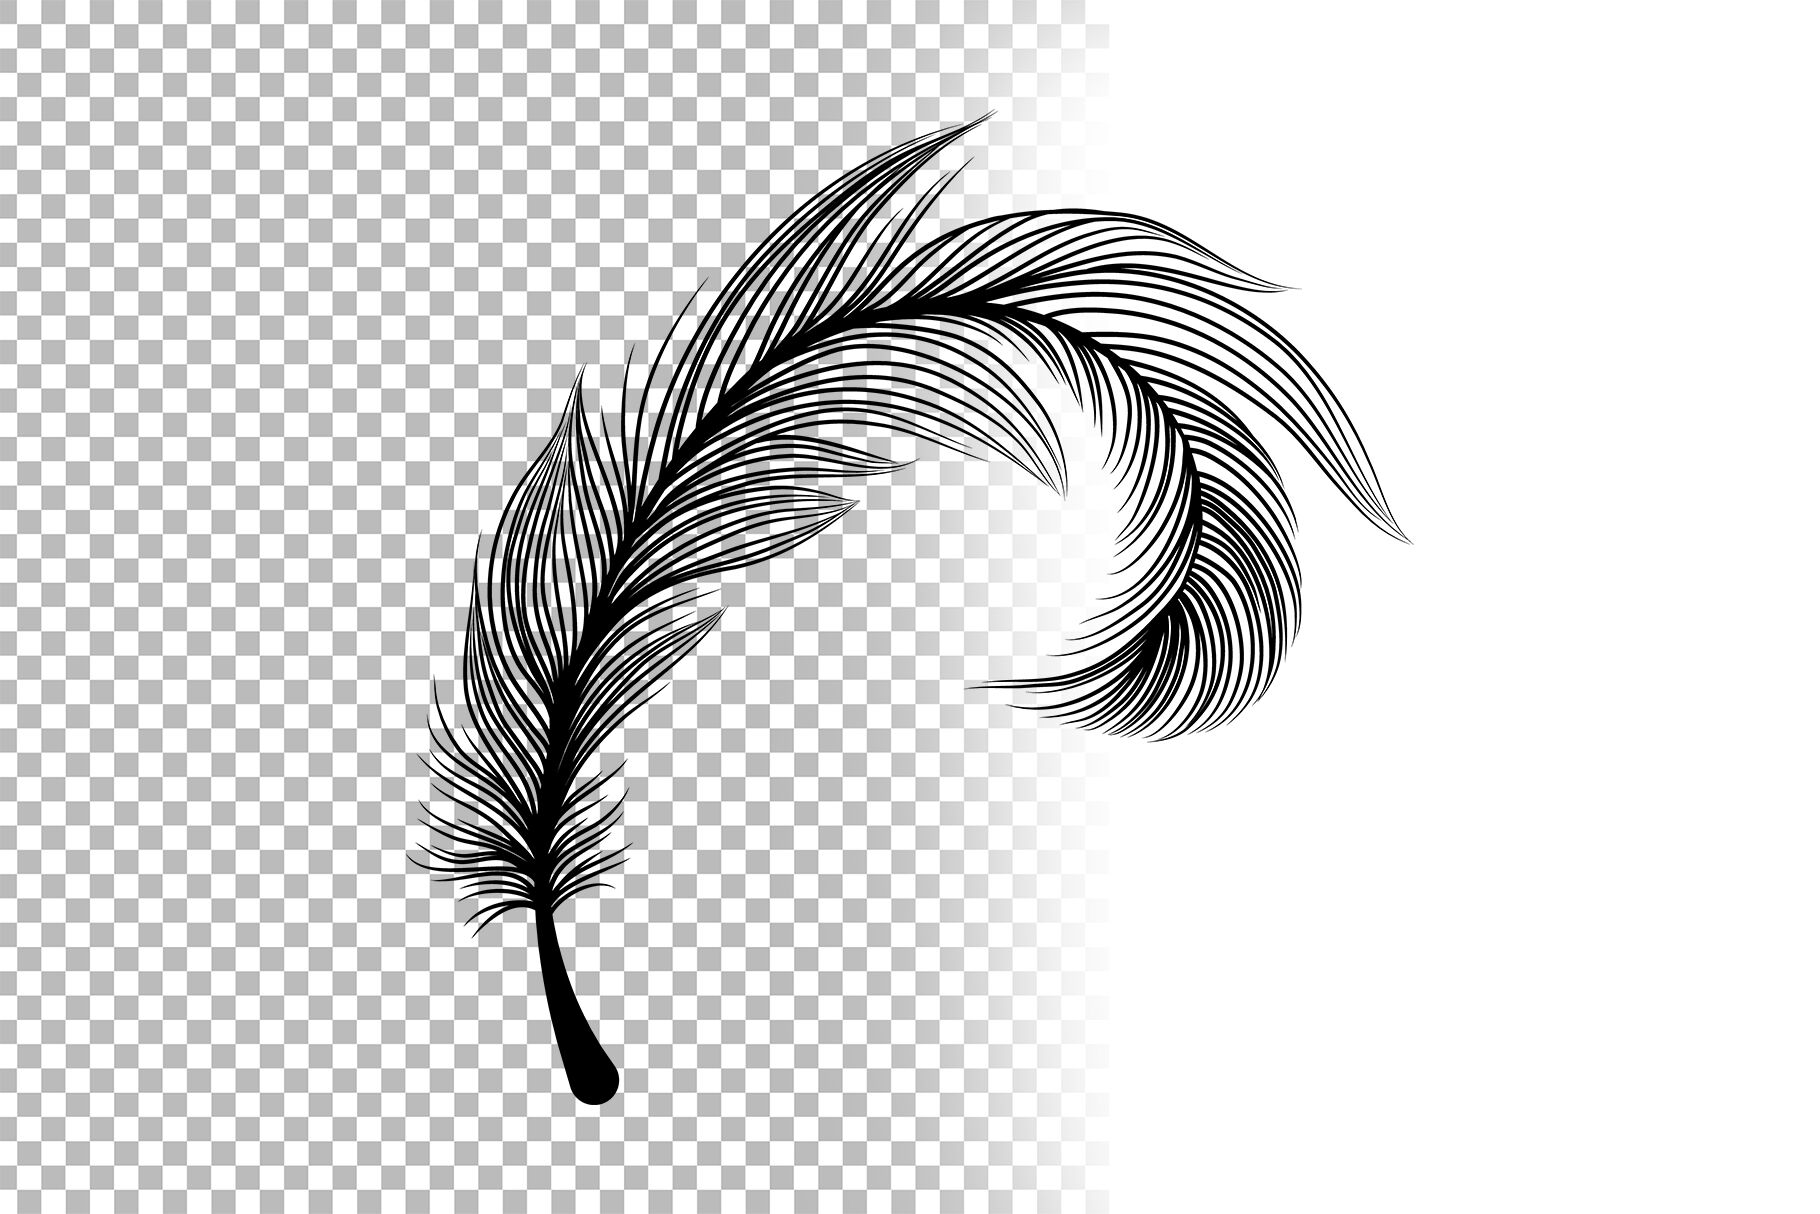 Black Feathers Stencil Boho Line Art Design Elements By ilonitta